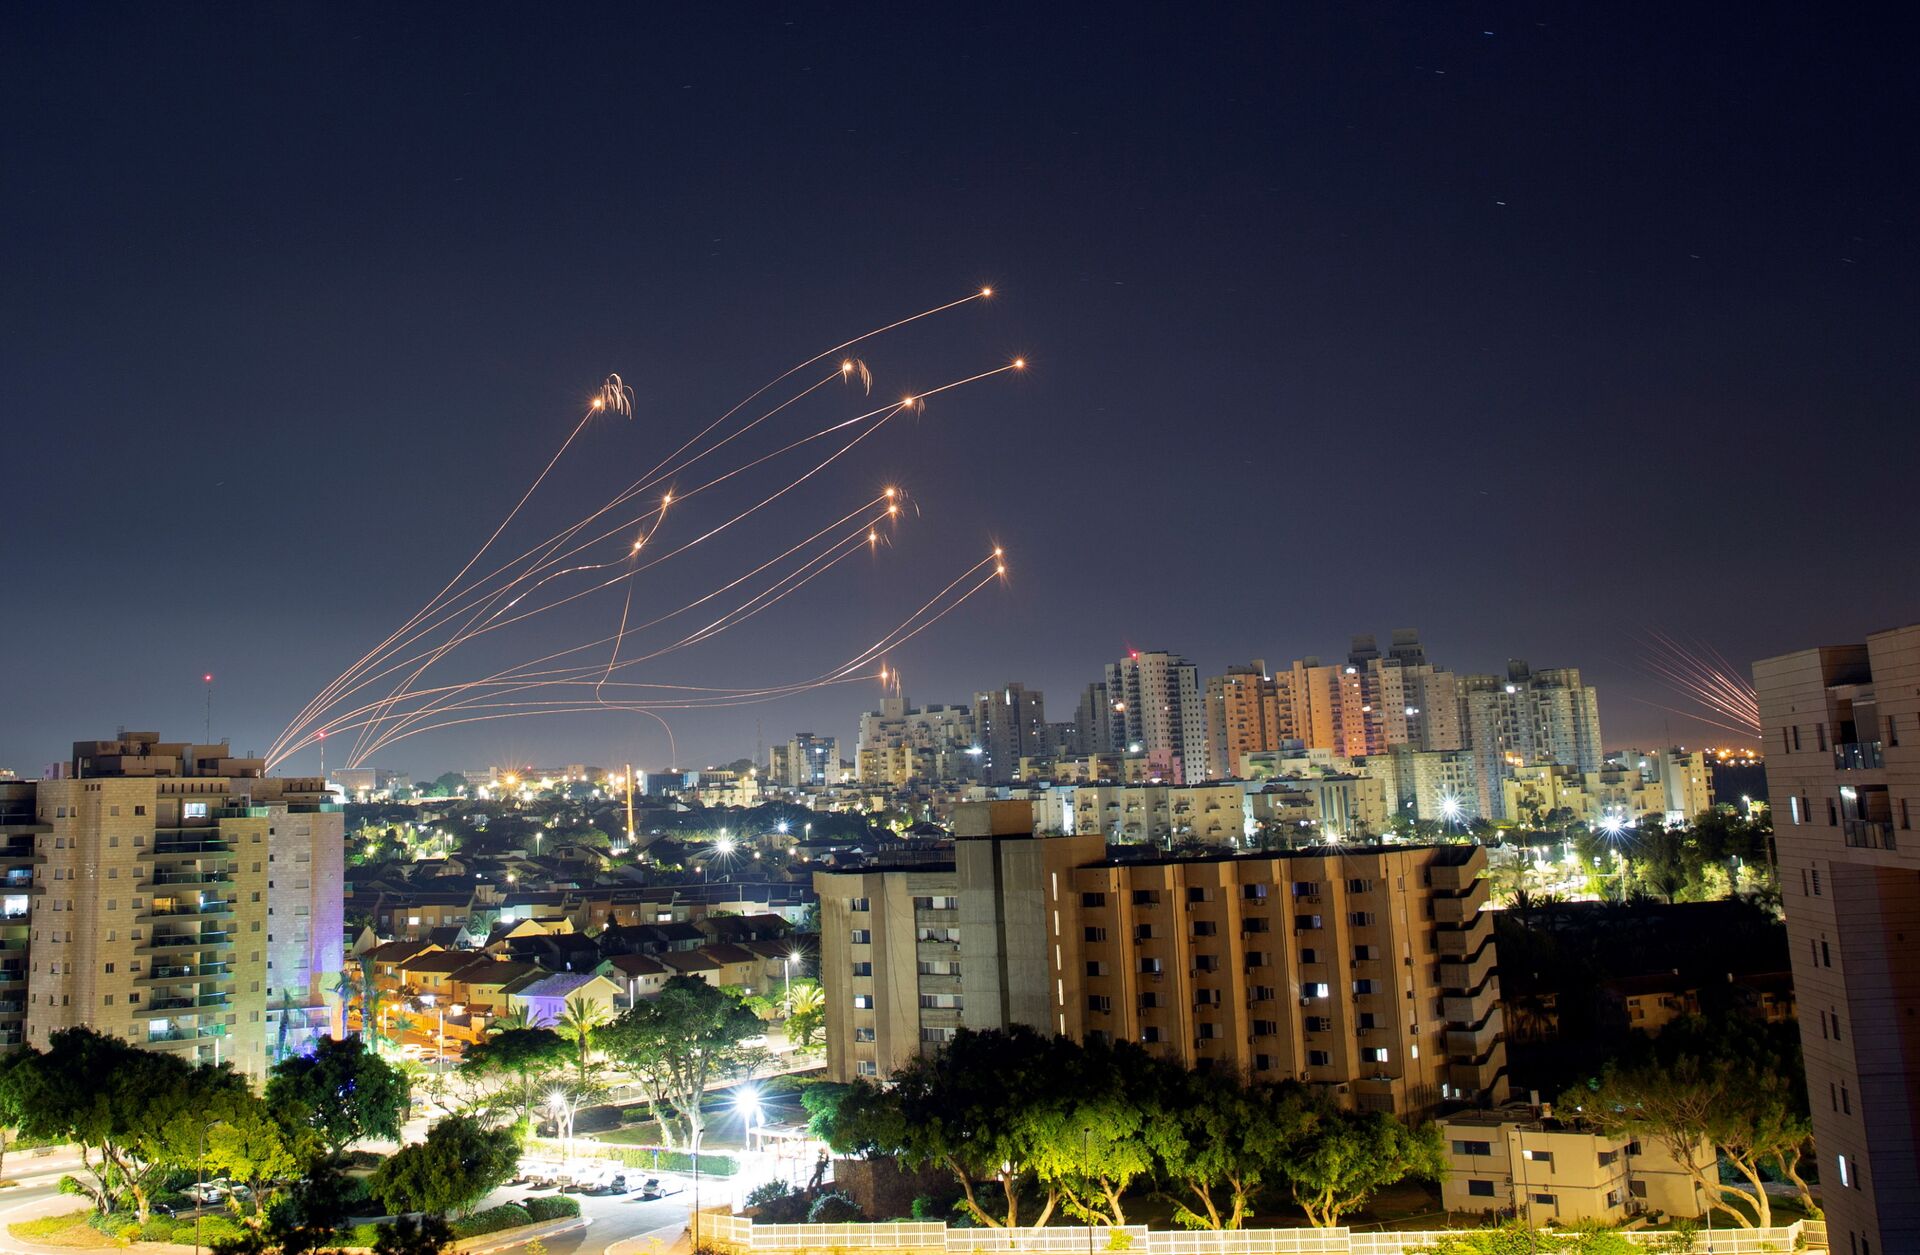 Gabinete de segurança de Israel aprova cessar-fogo em Gaza após 11 dias de combate - Sputnik Brasil, 1920, 20.05.2021